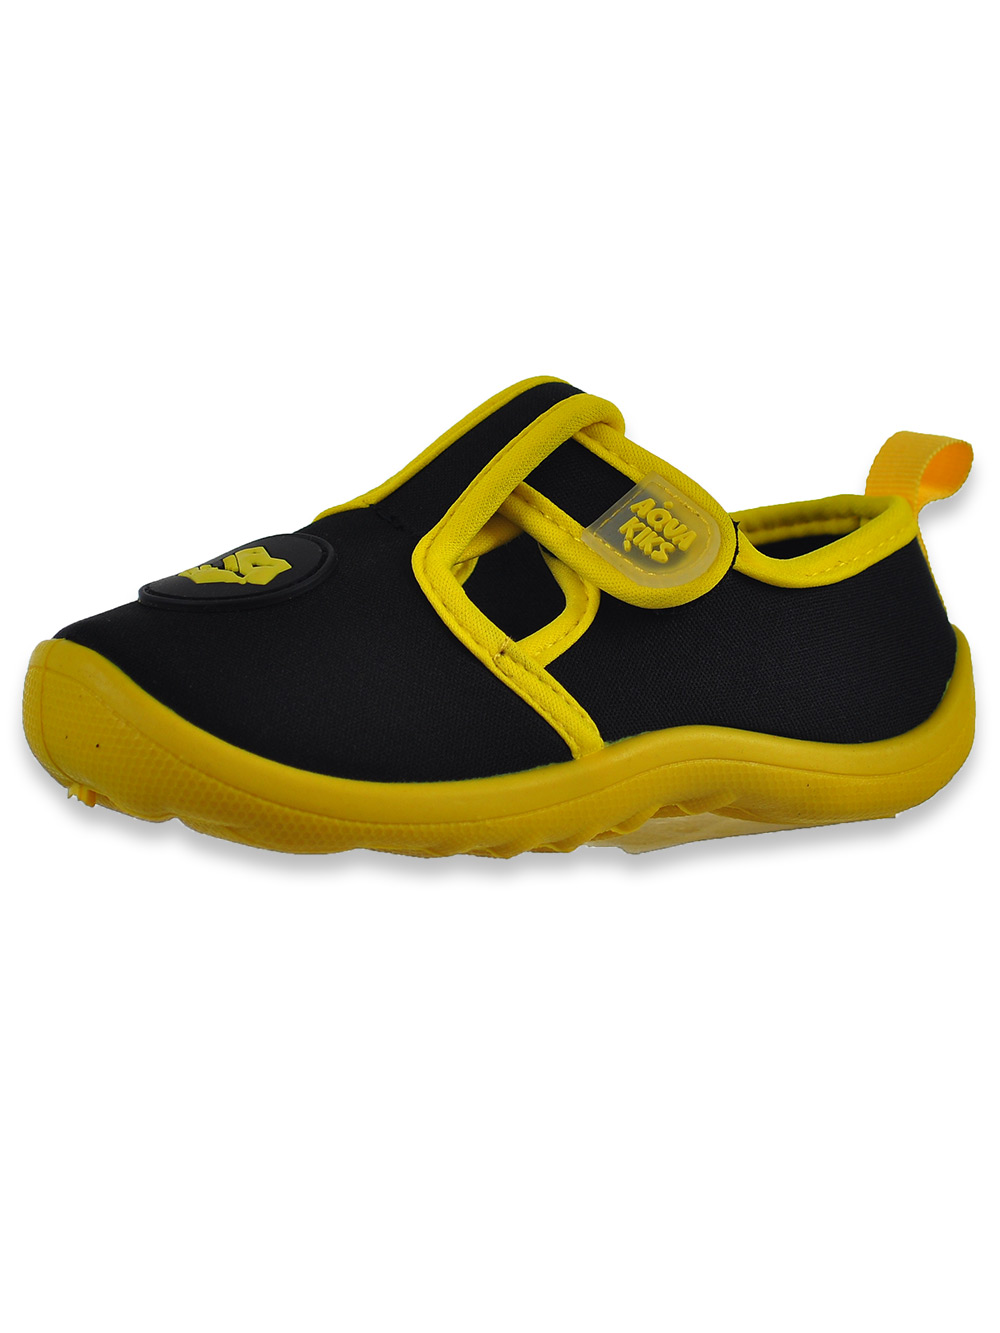 yellow swim shoes